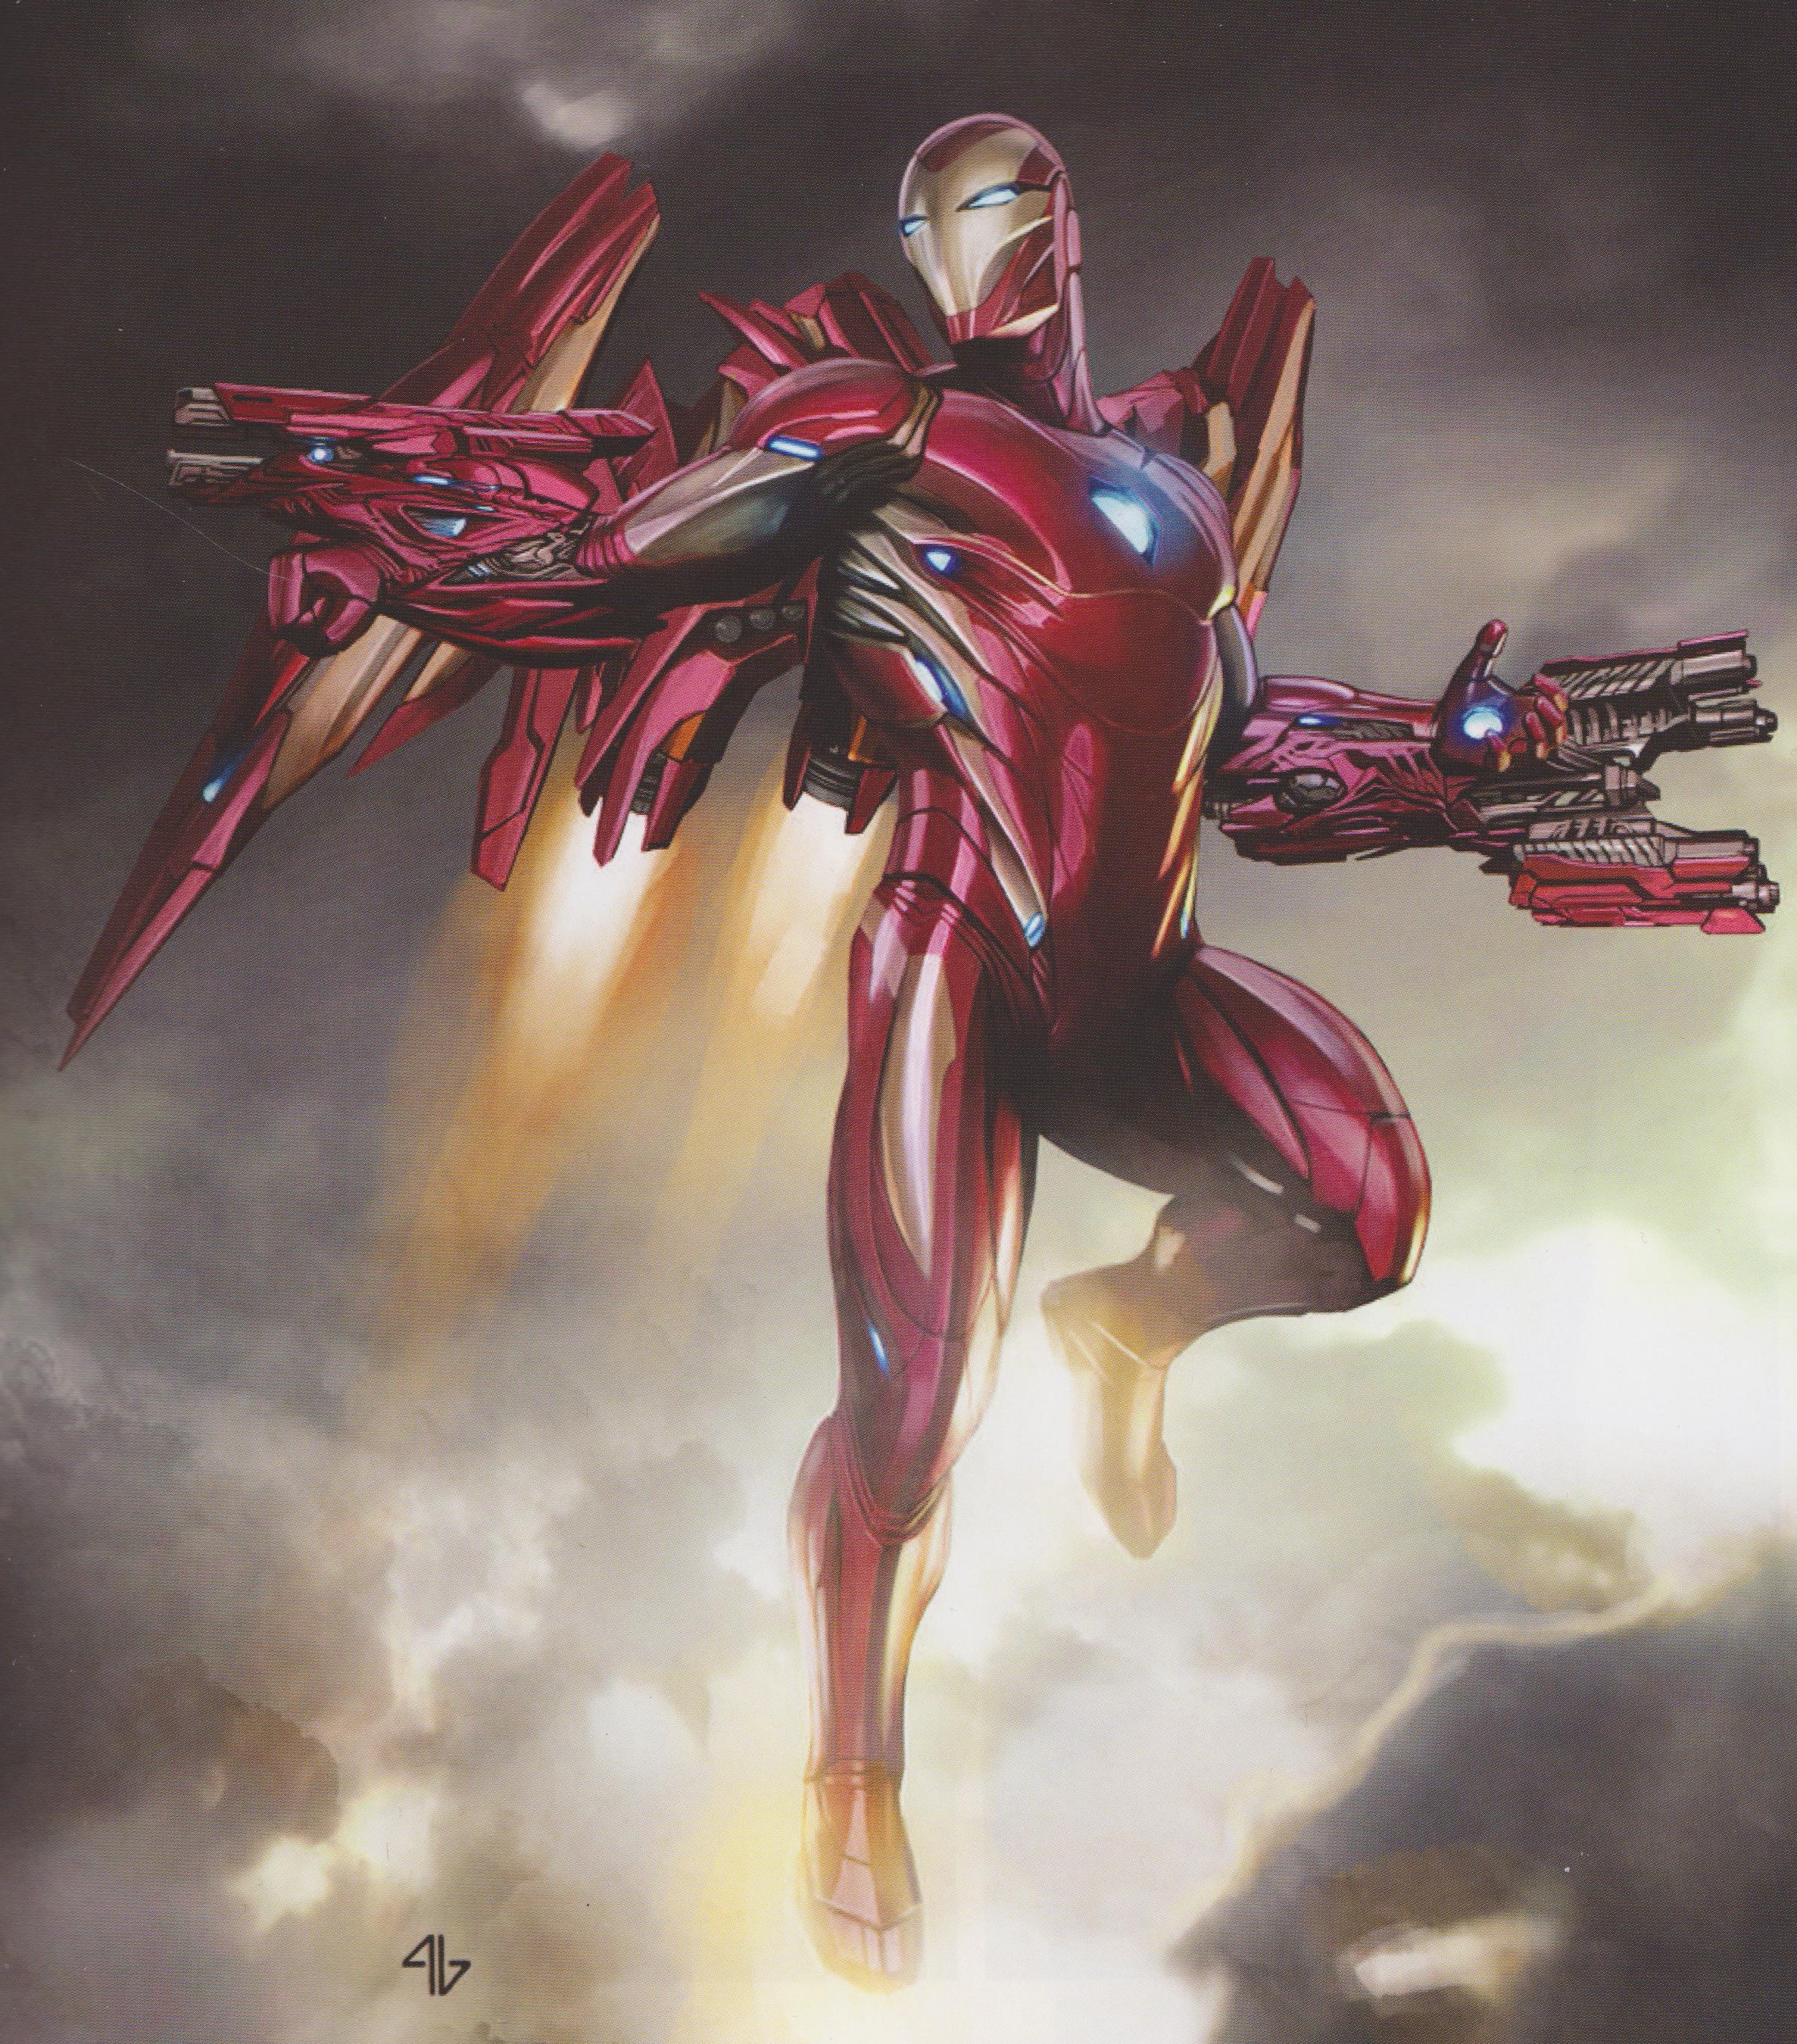 Avengers Endgame Iron Man Concept Art